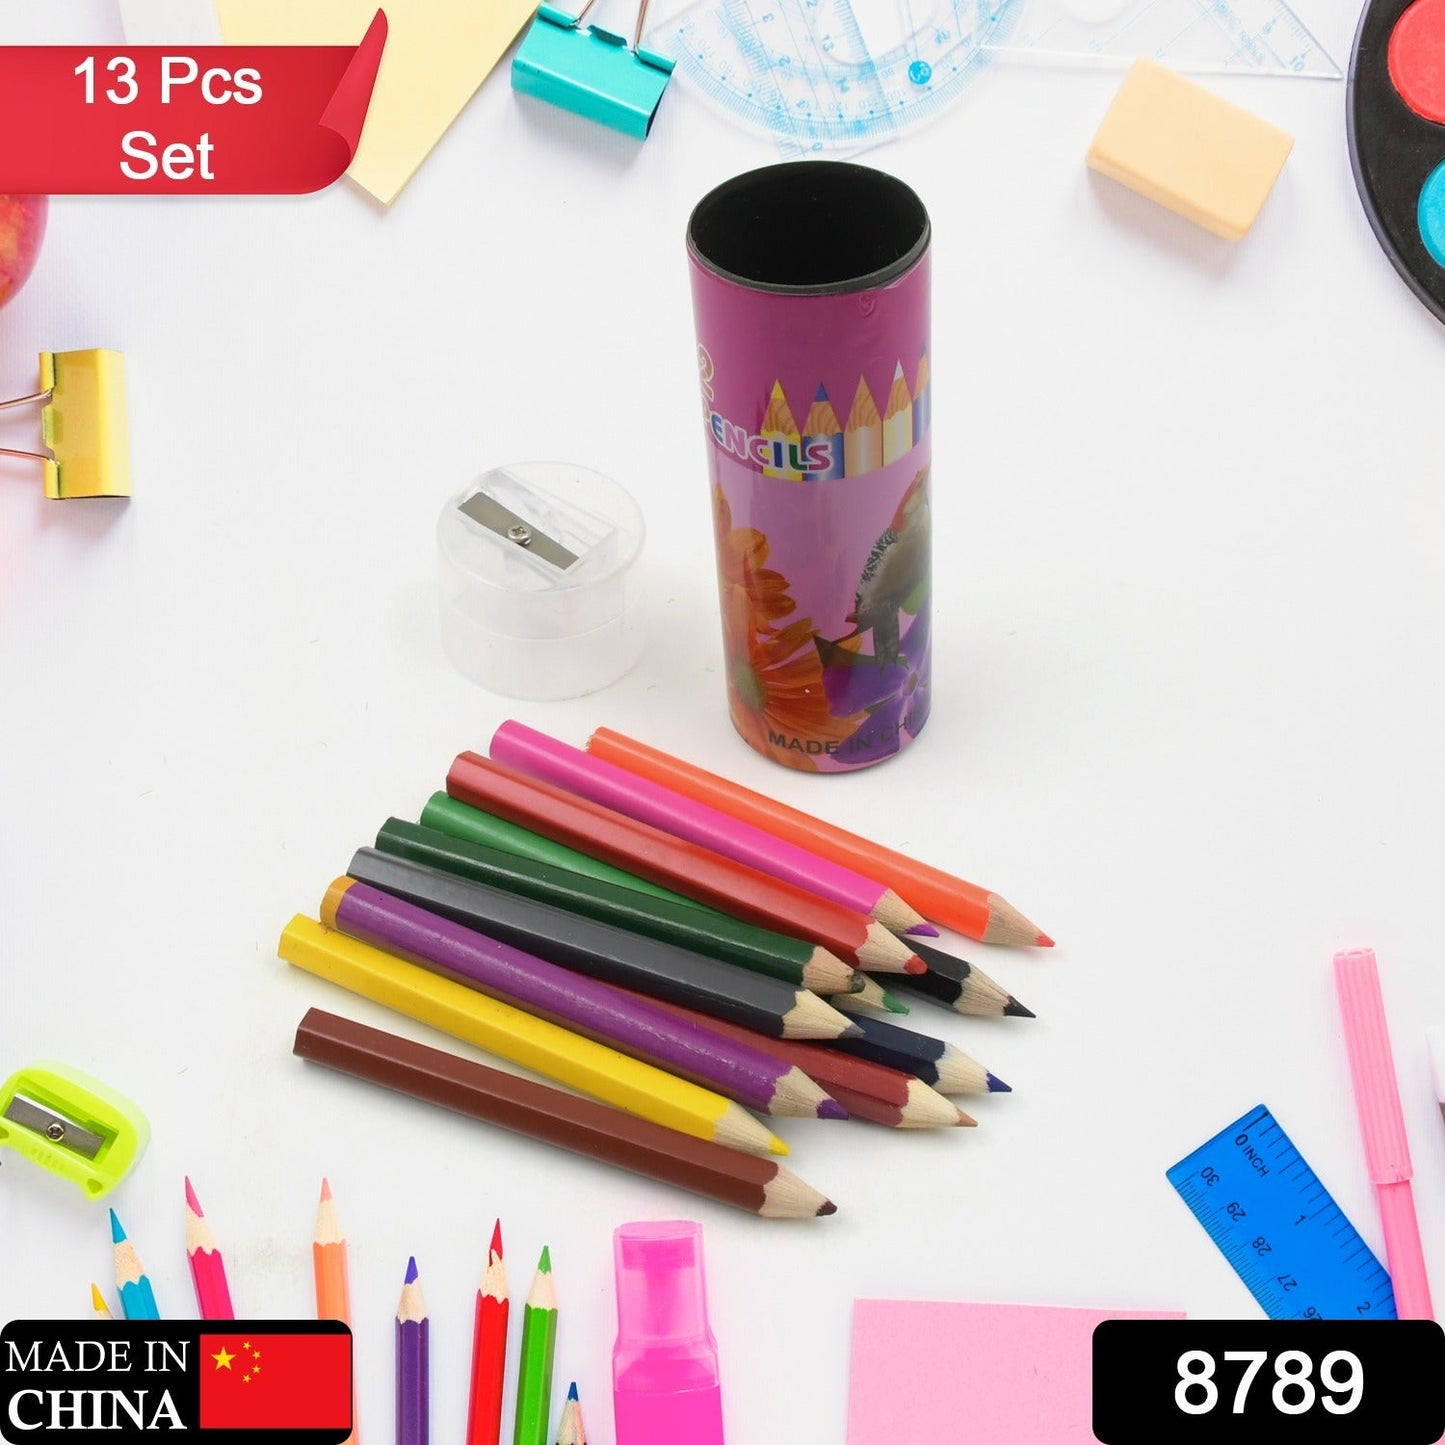 8789 13pcs Colored Pencils Watercolor Pencils With Sharpner Artist Pencils Colored Pencil Art Graphite Pencils Oil Pencils Pencil for Kids Art Supplies Child Gift Wooden Aldult (13 Pcs Set) - deal99.in